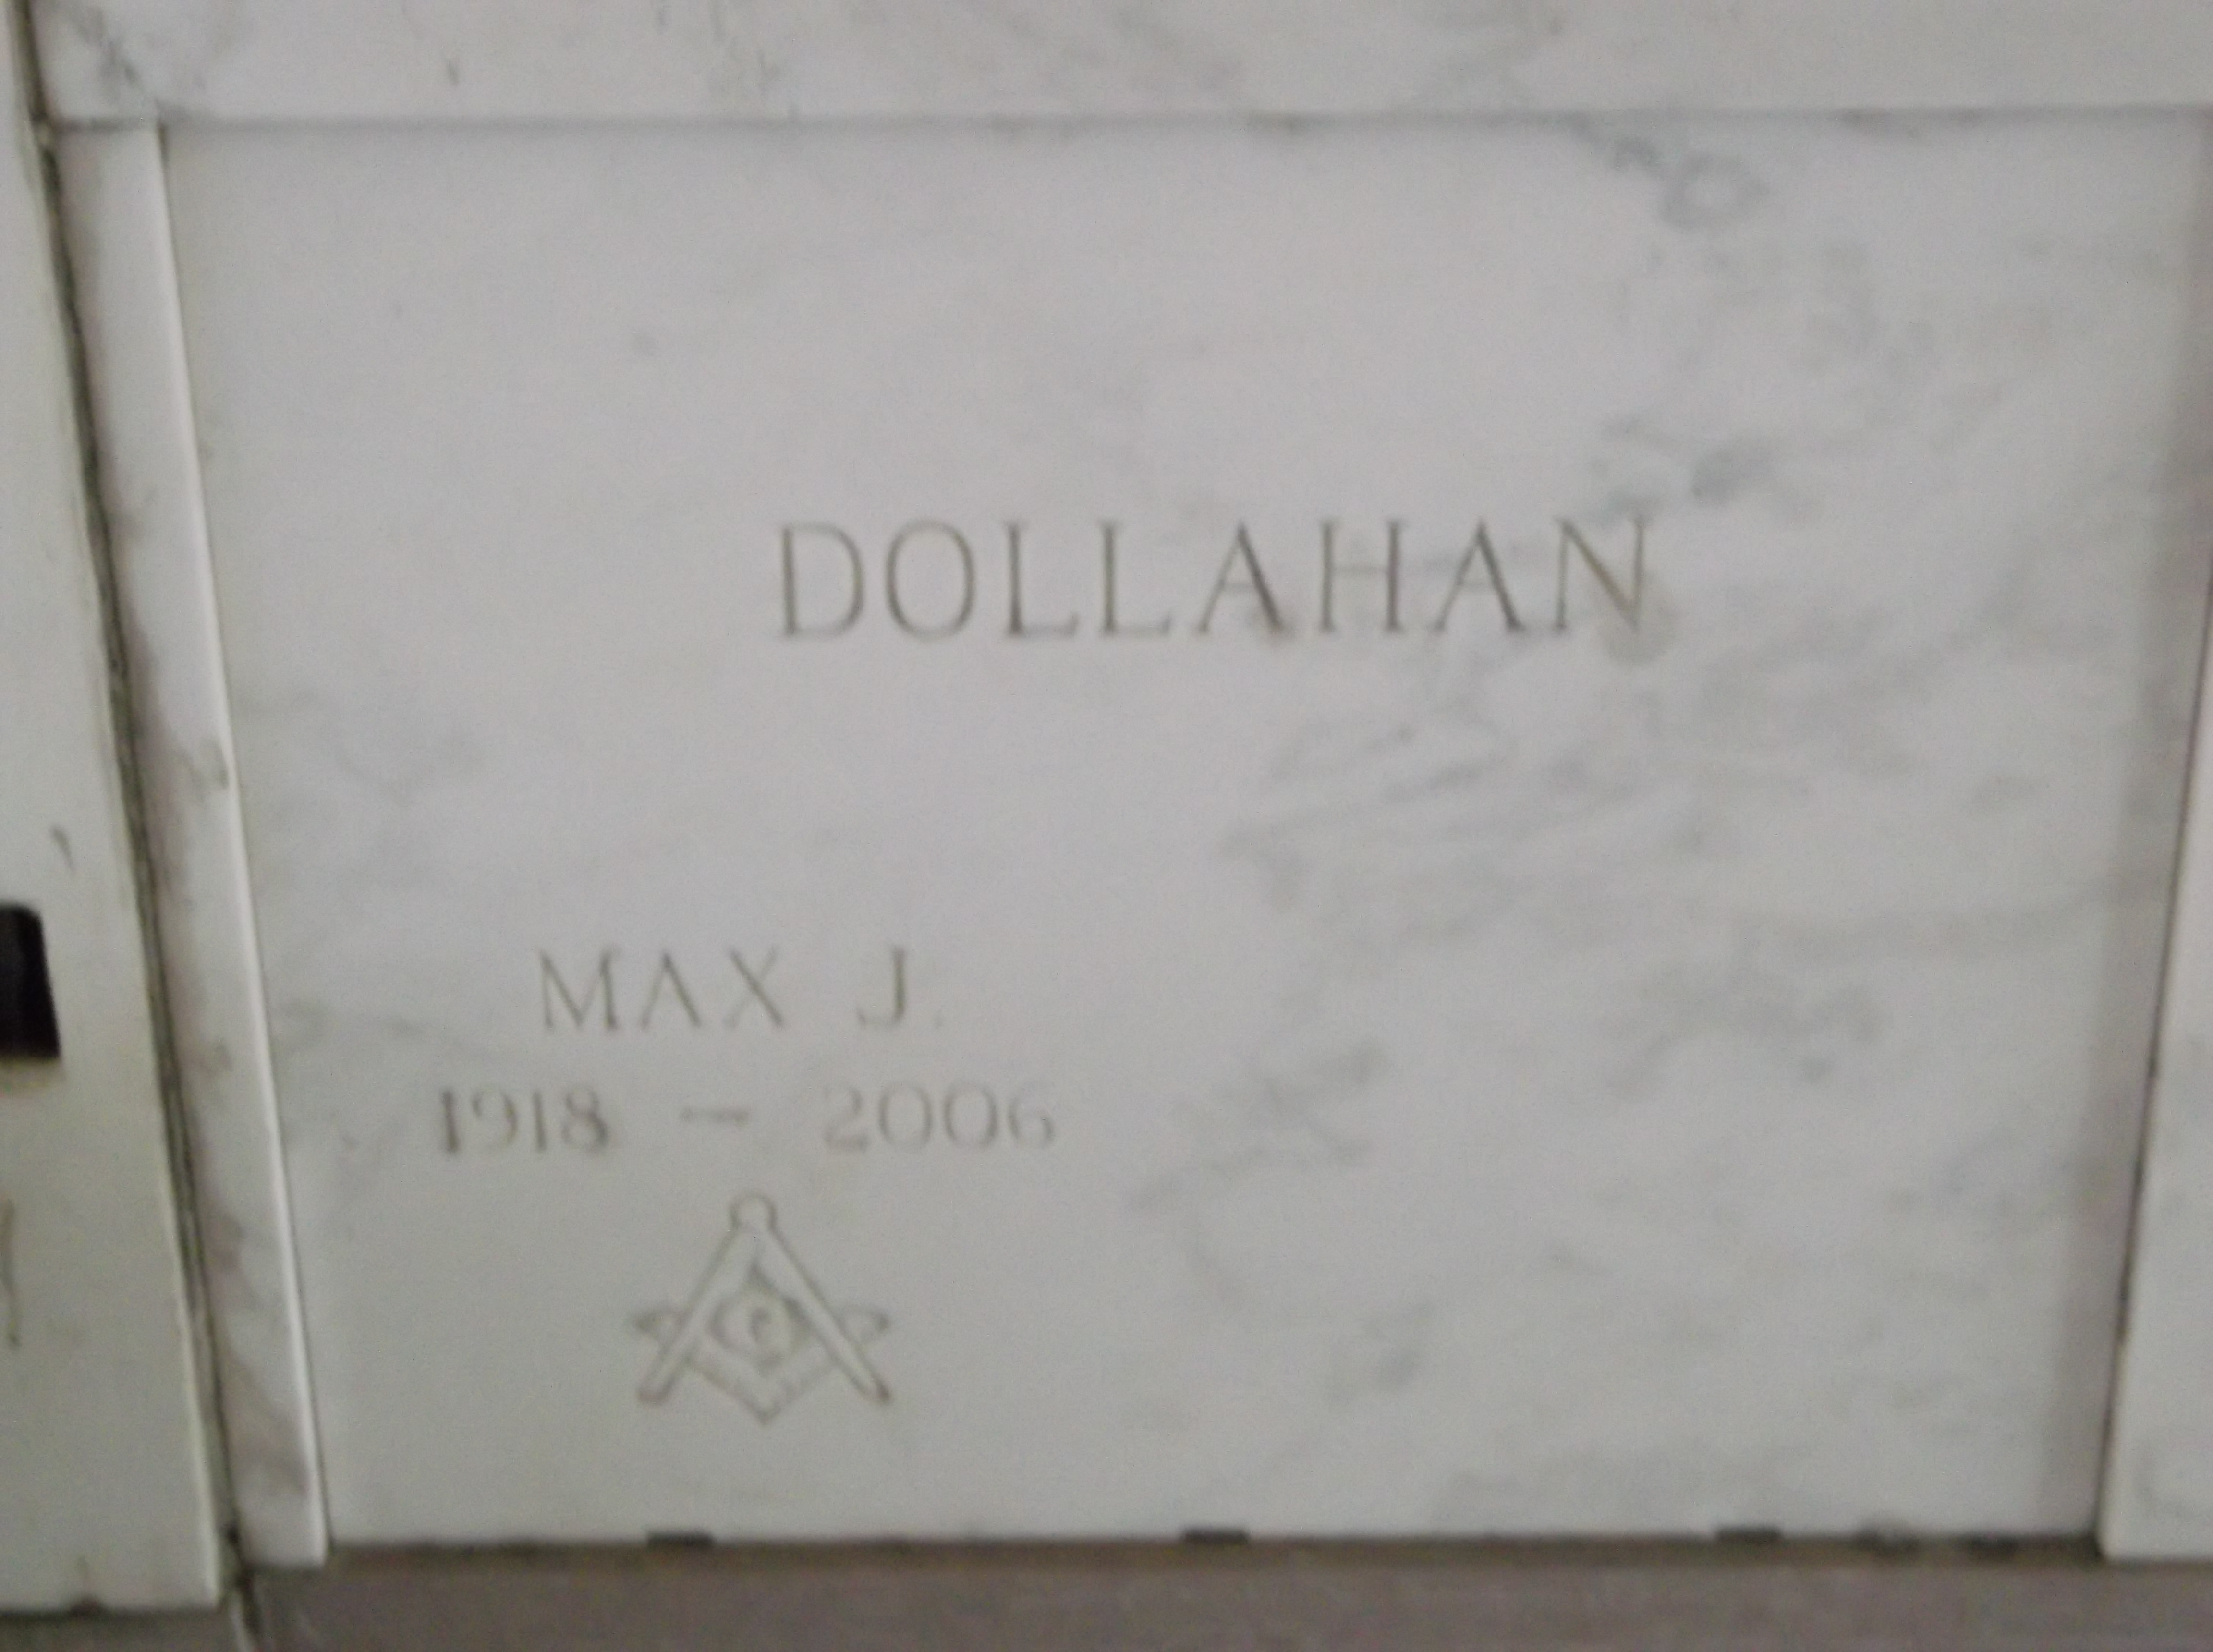 Max J Dollahan